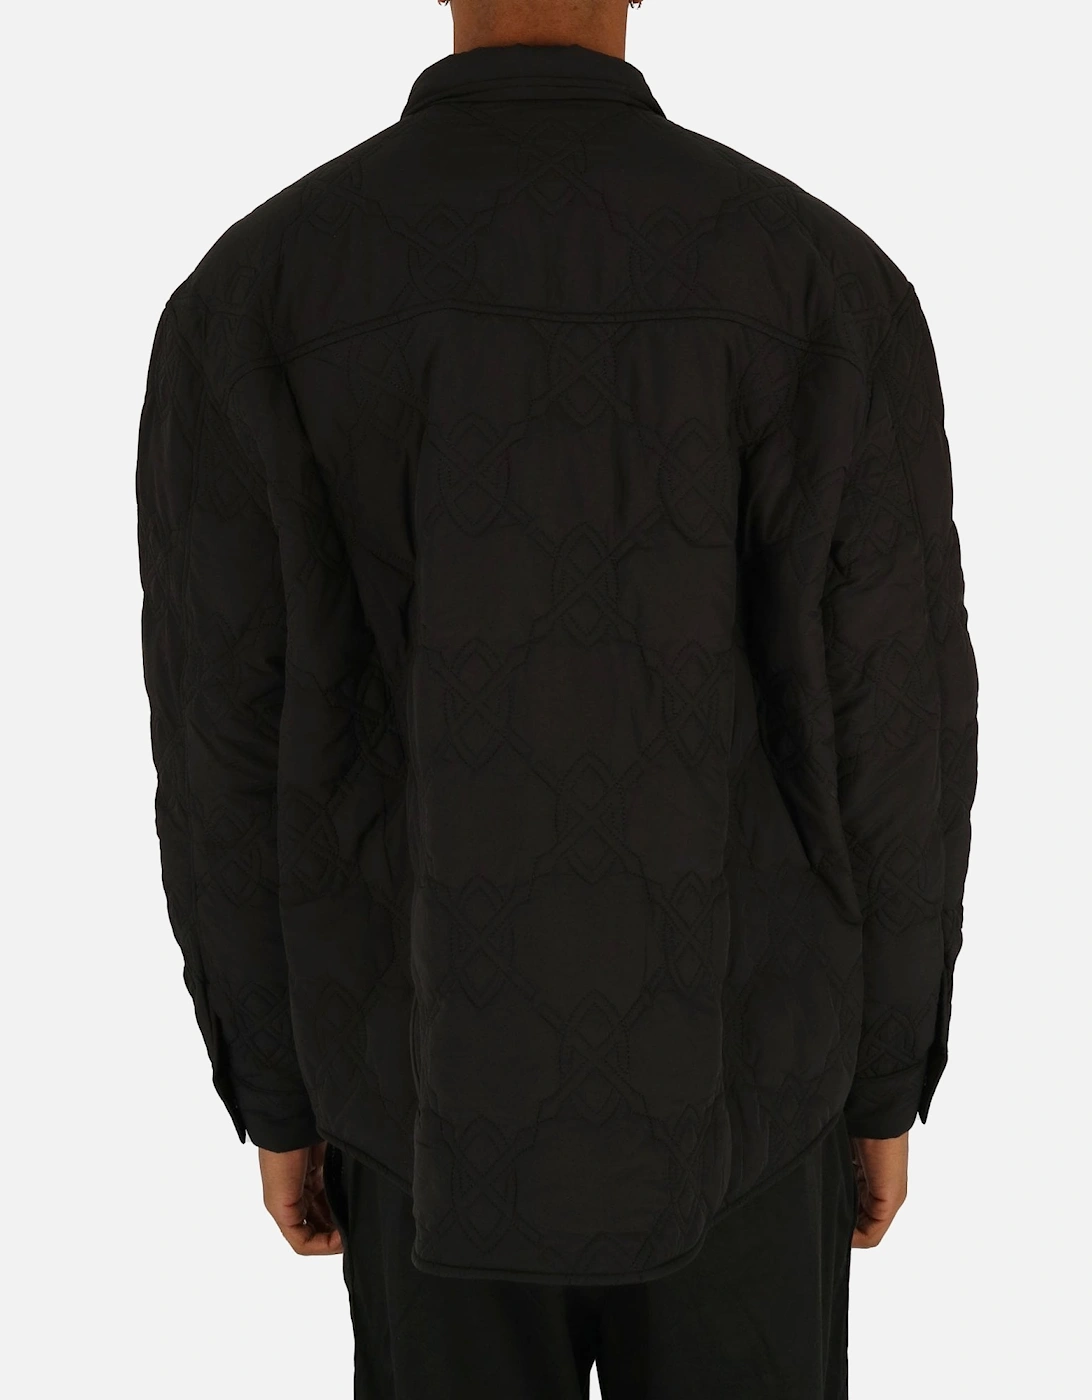 Rajub Embroidered Sheild Black Overshirt Jacket